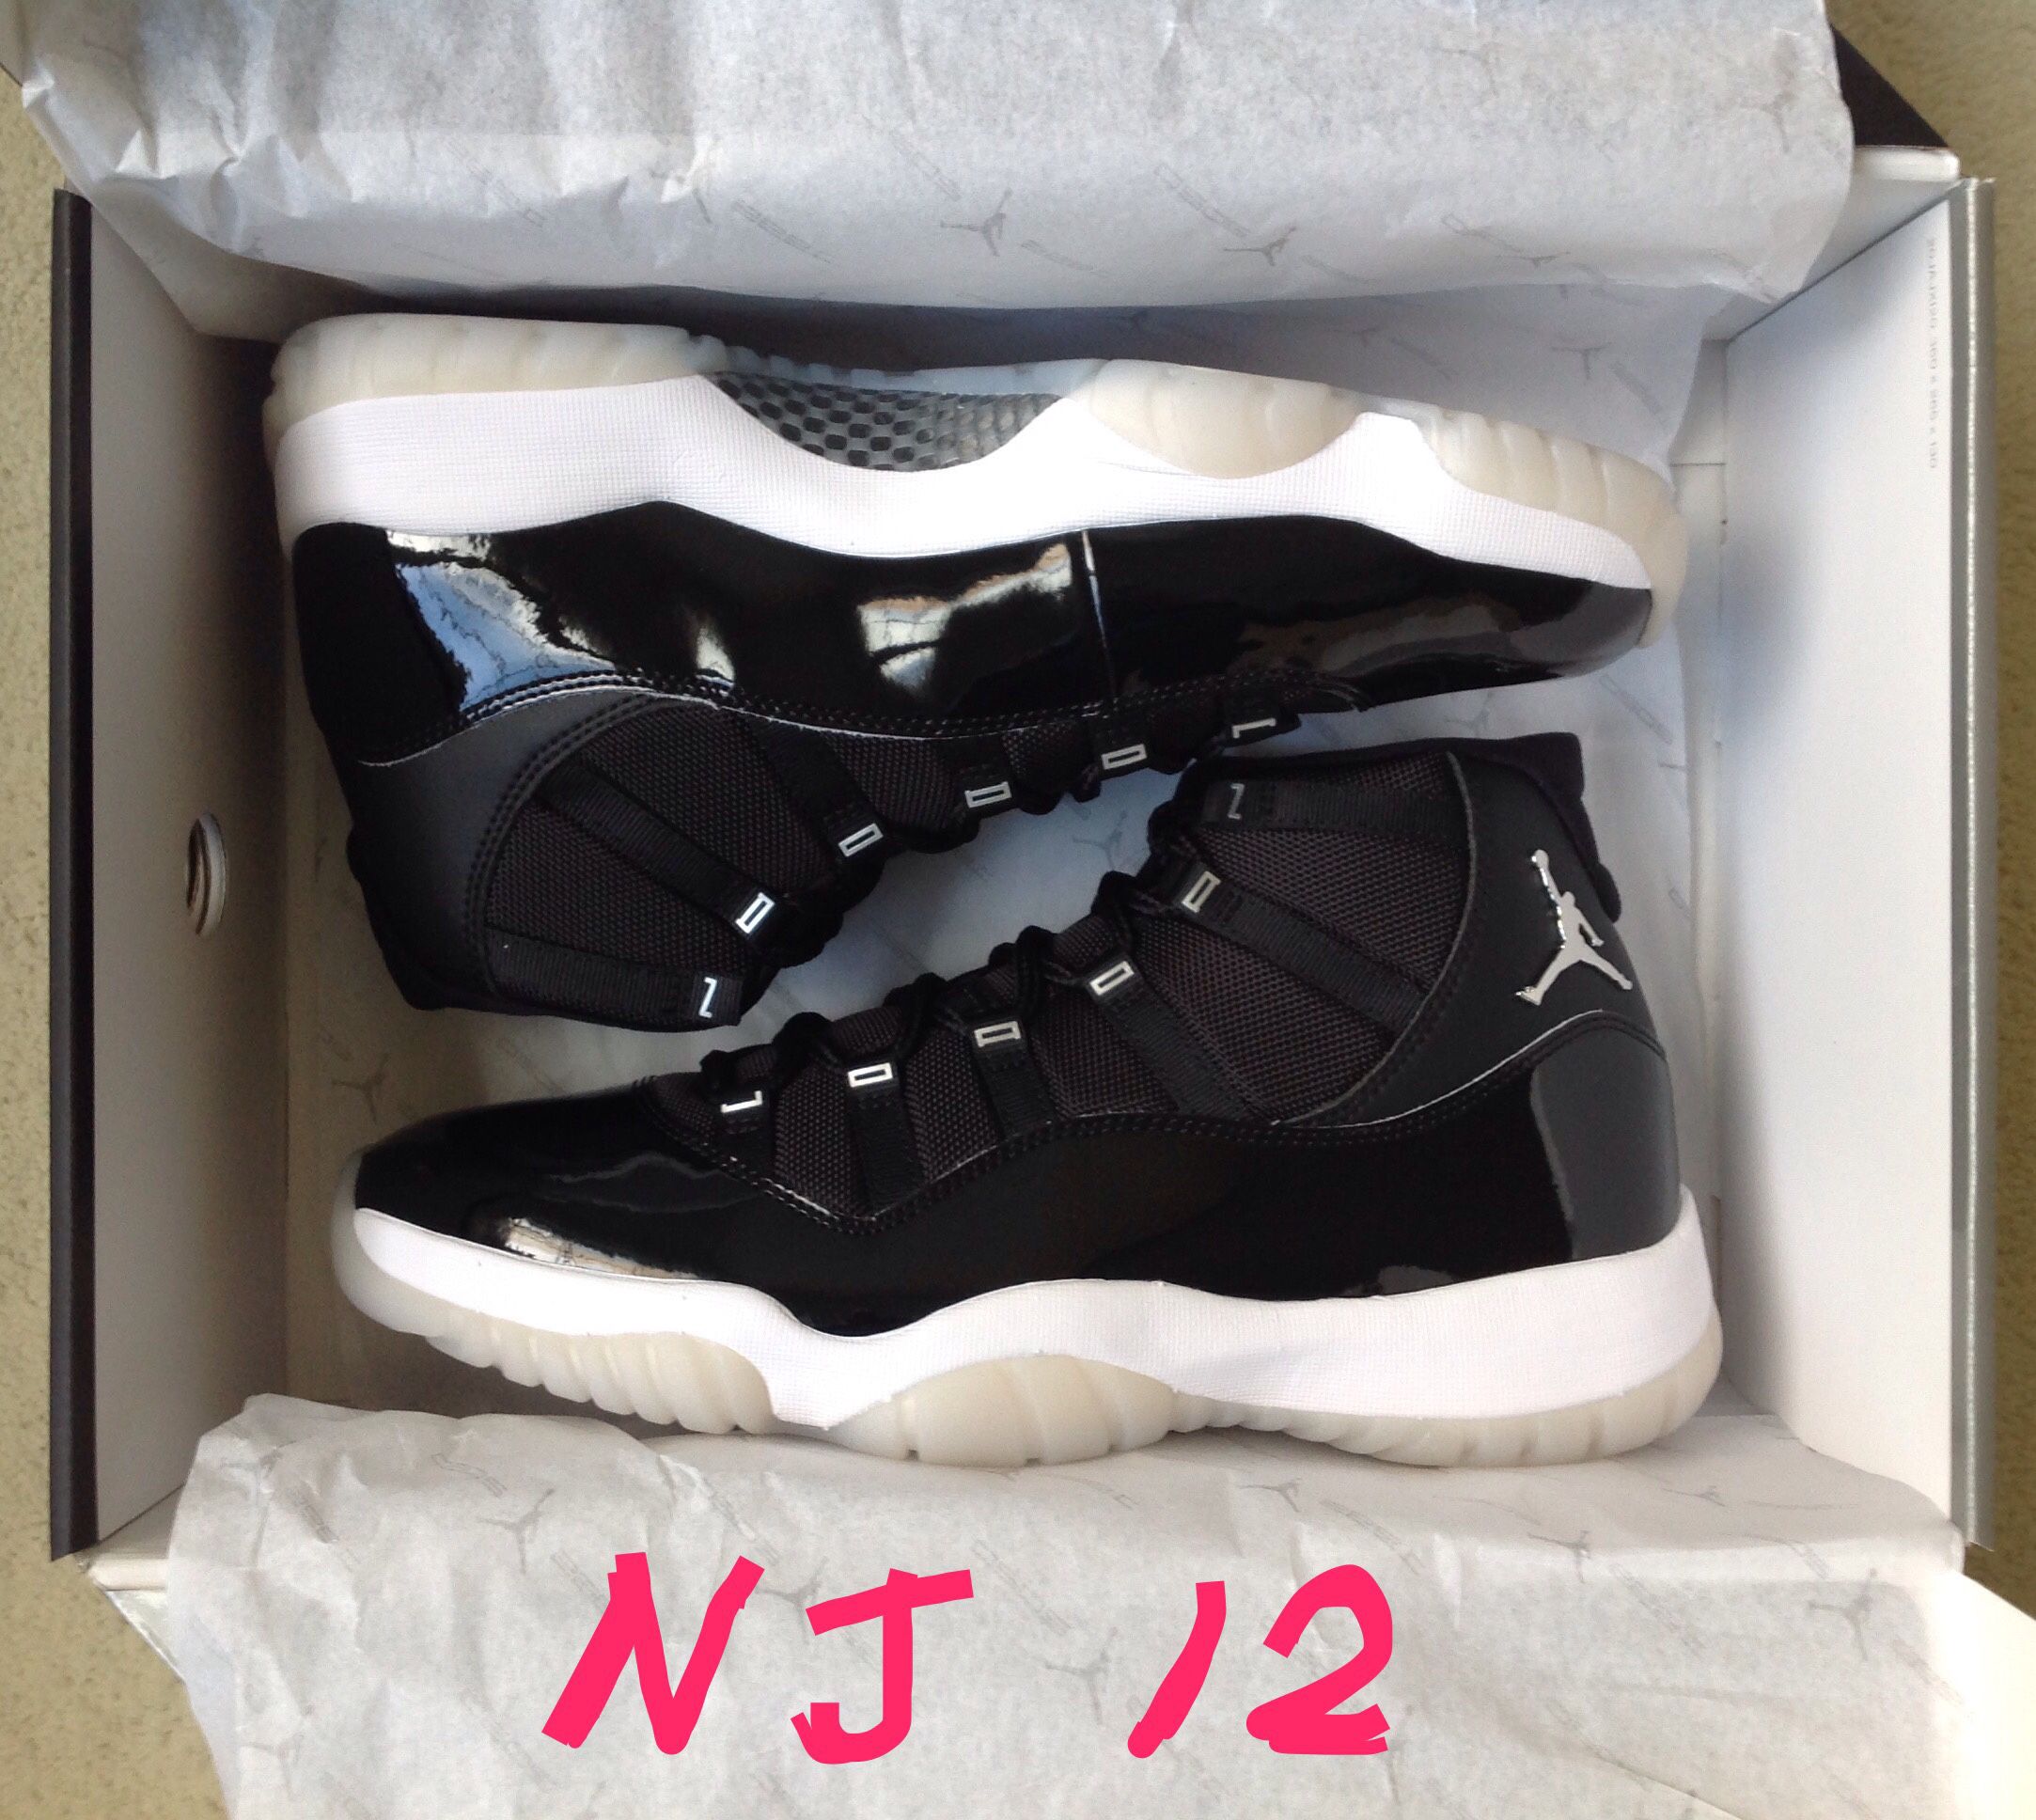 Nike Air Jordan 11 Jubilee Retro XI 25th Anniversary Black Basketball Shoes ⭐️ CT8012-011 ⭐️ Size Sz Men's 12 ⭐️ New Deadstock DS Receipt